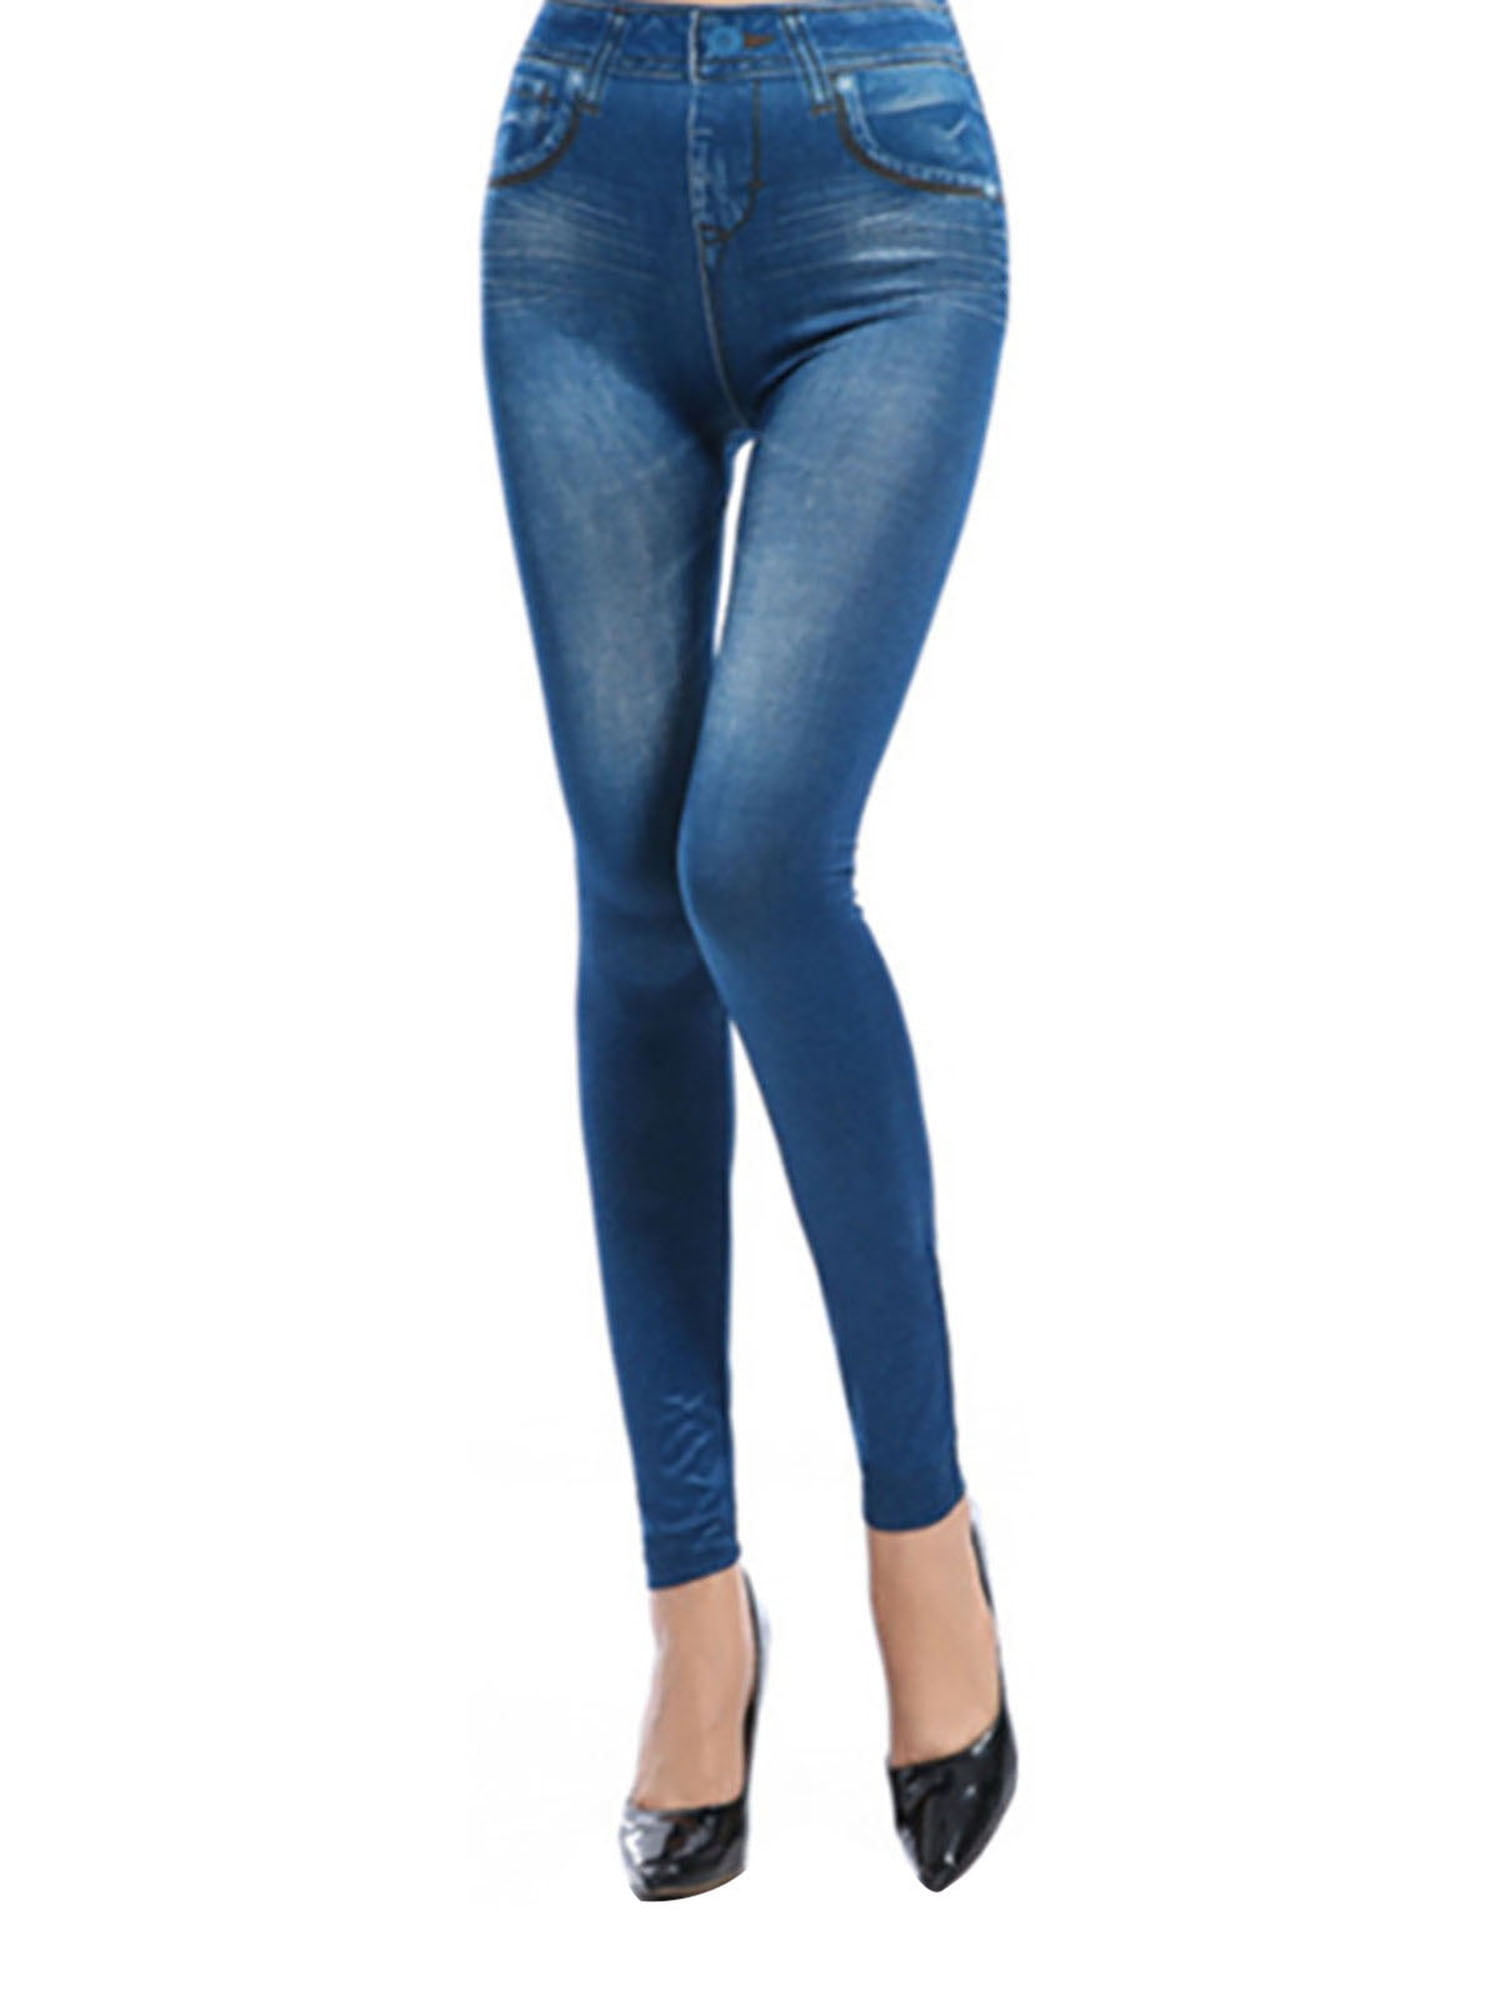 Long stretch jeans Womens denim high waist skinny pants slim trousers elastic